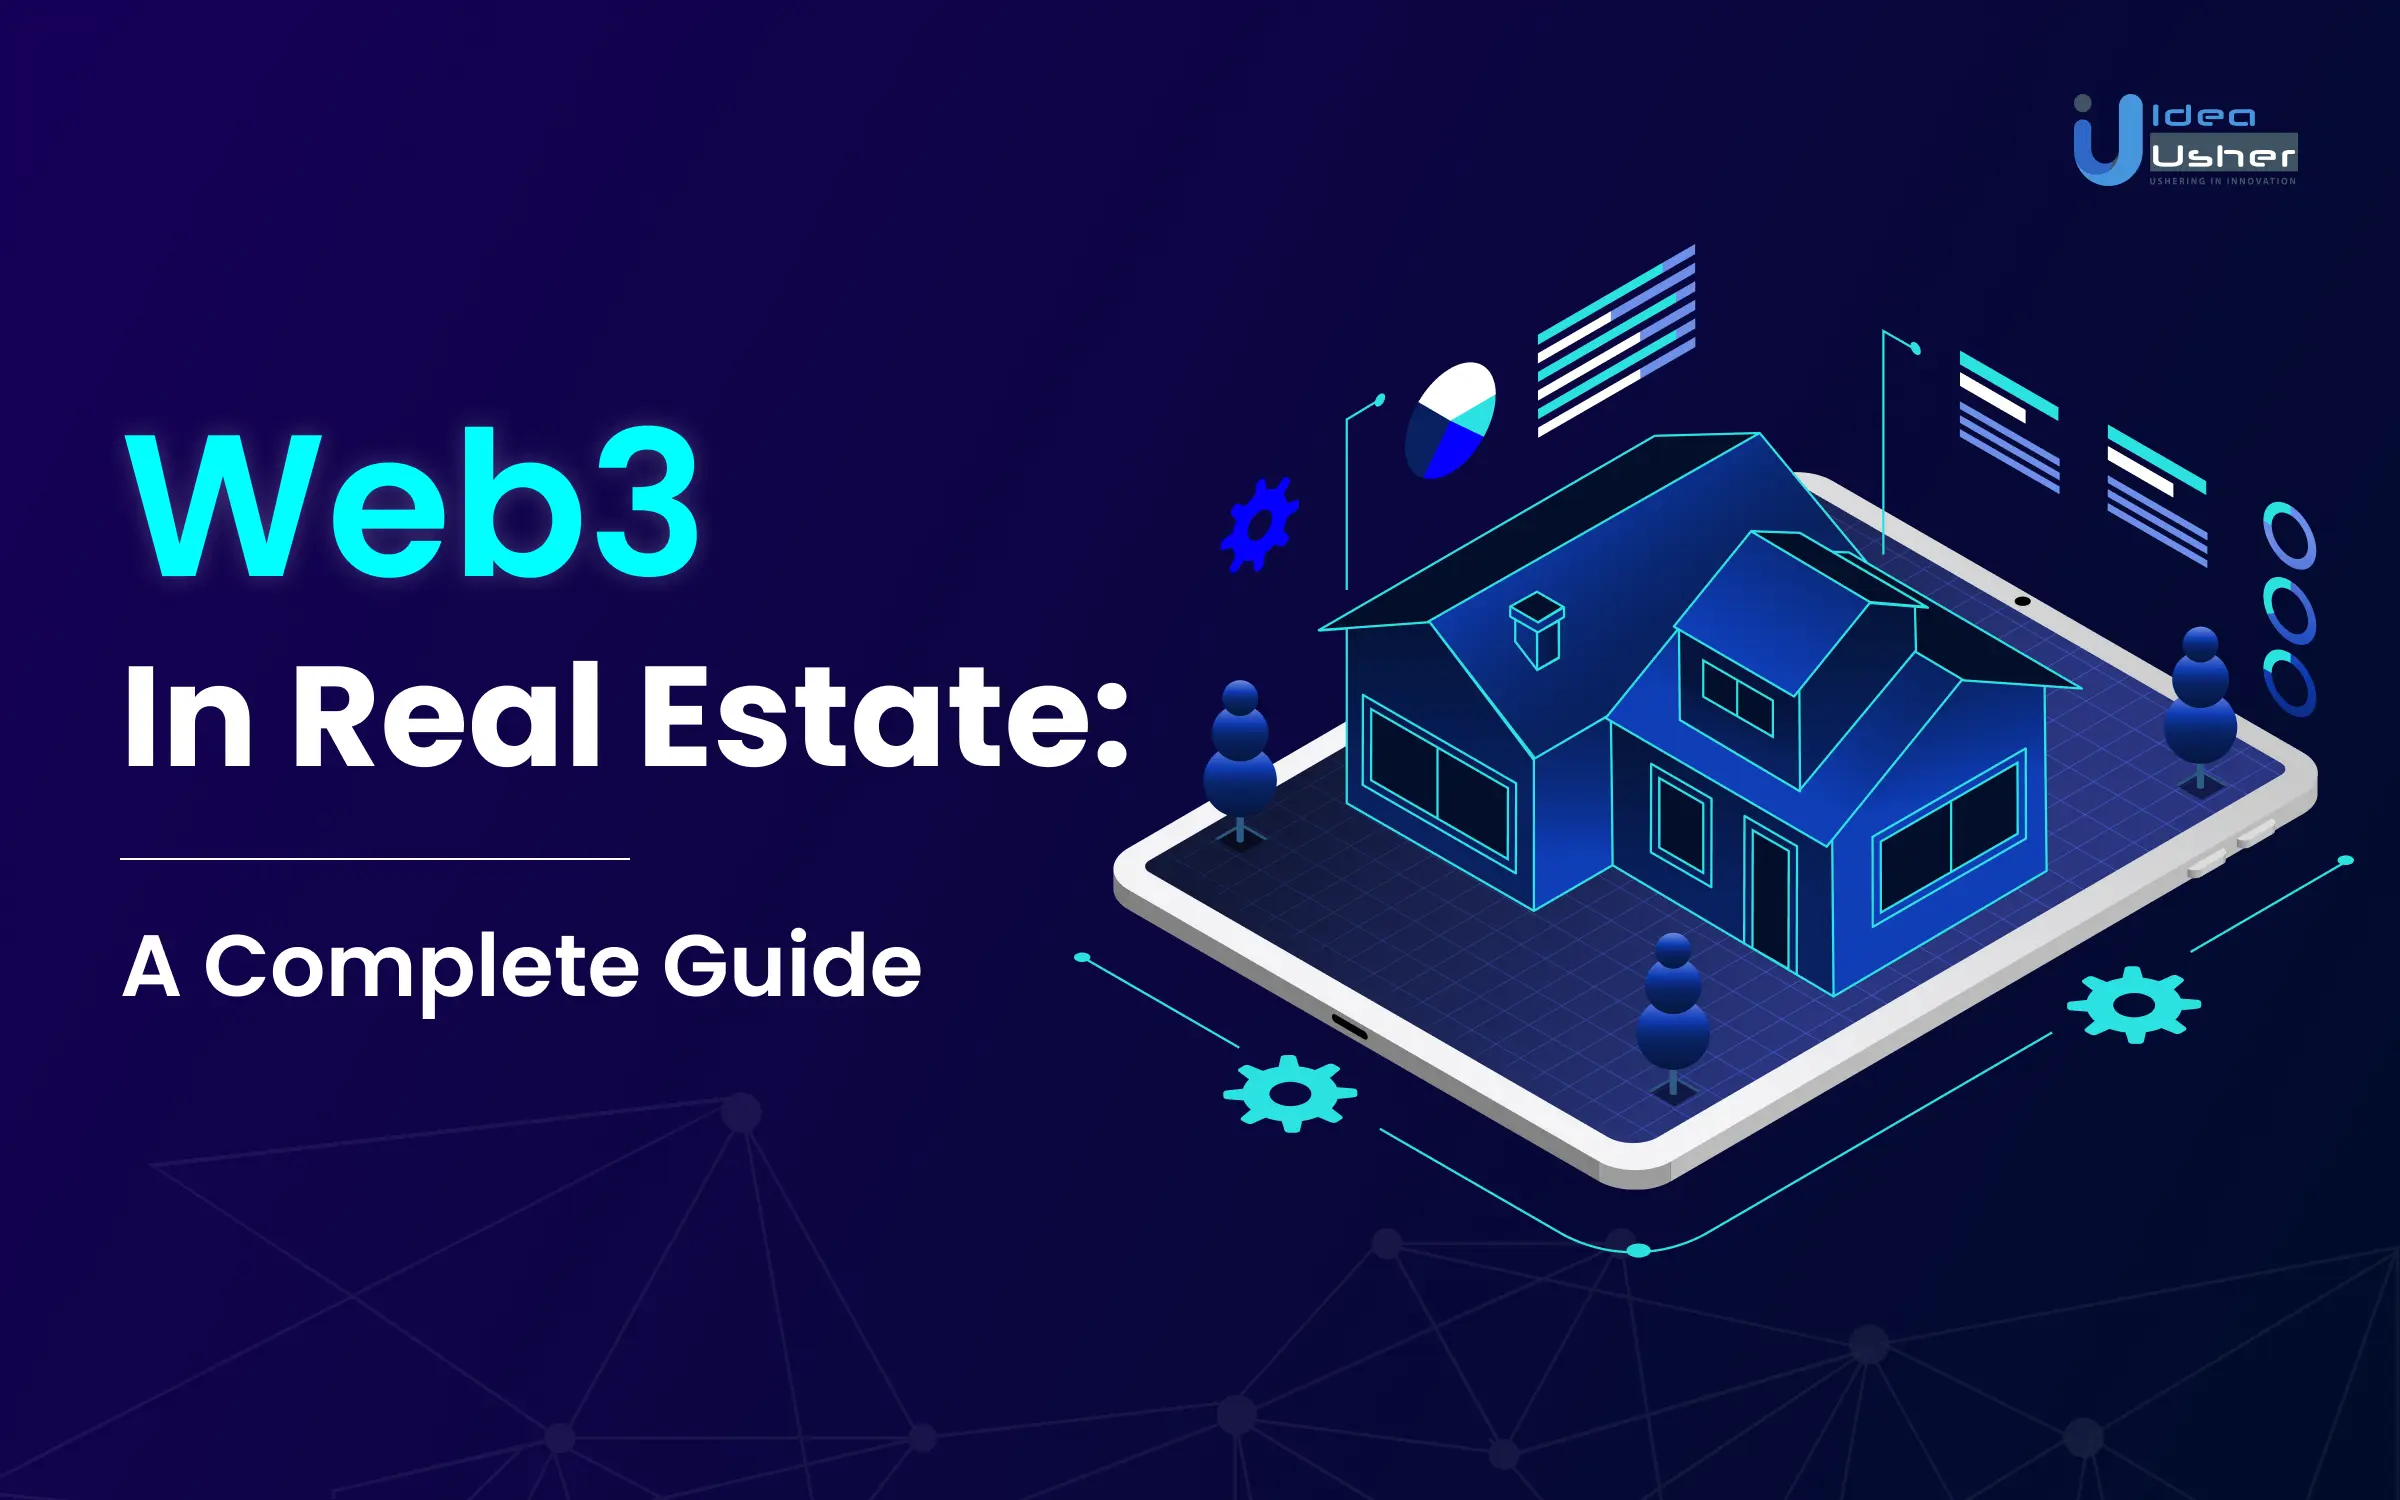 Web3 in Real Estate